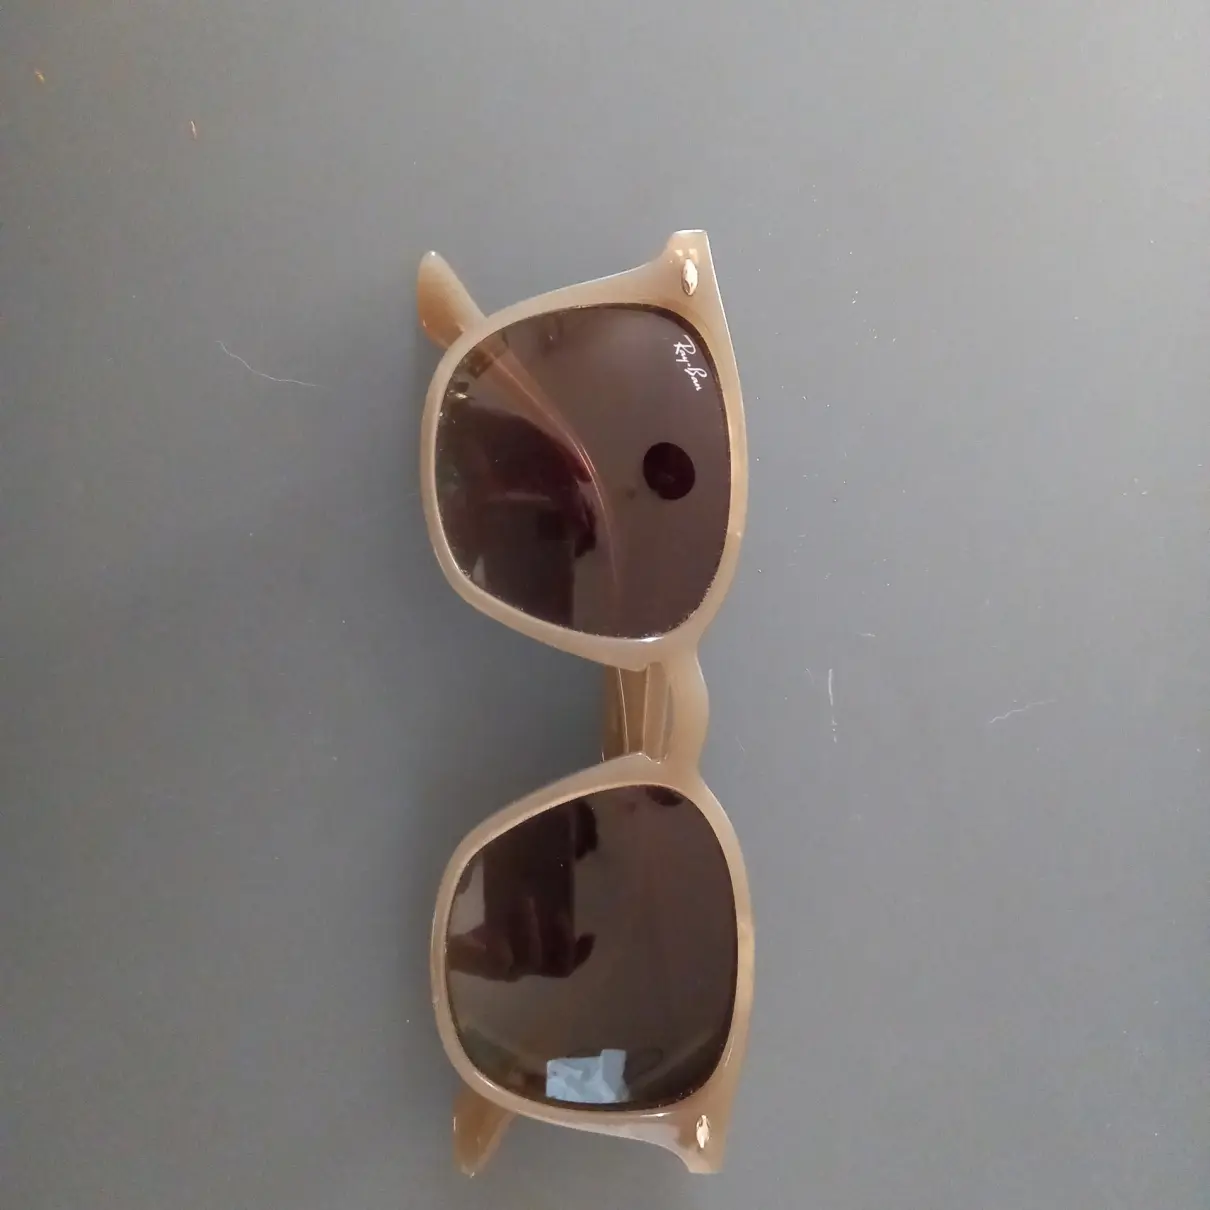 Buy Ray-Ban Erika sunglasses online